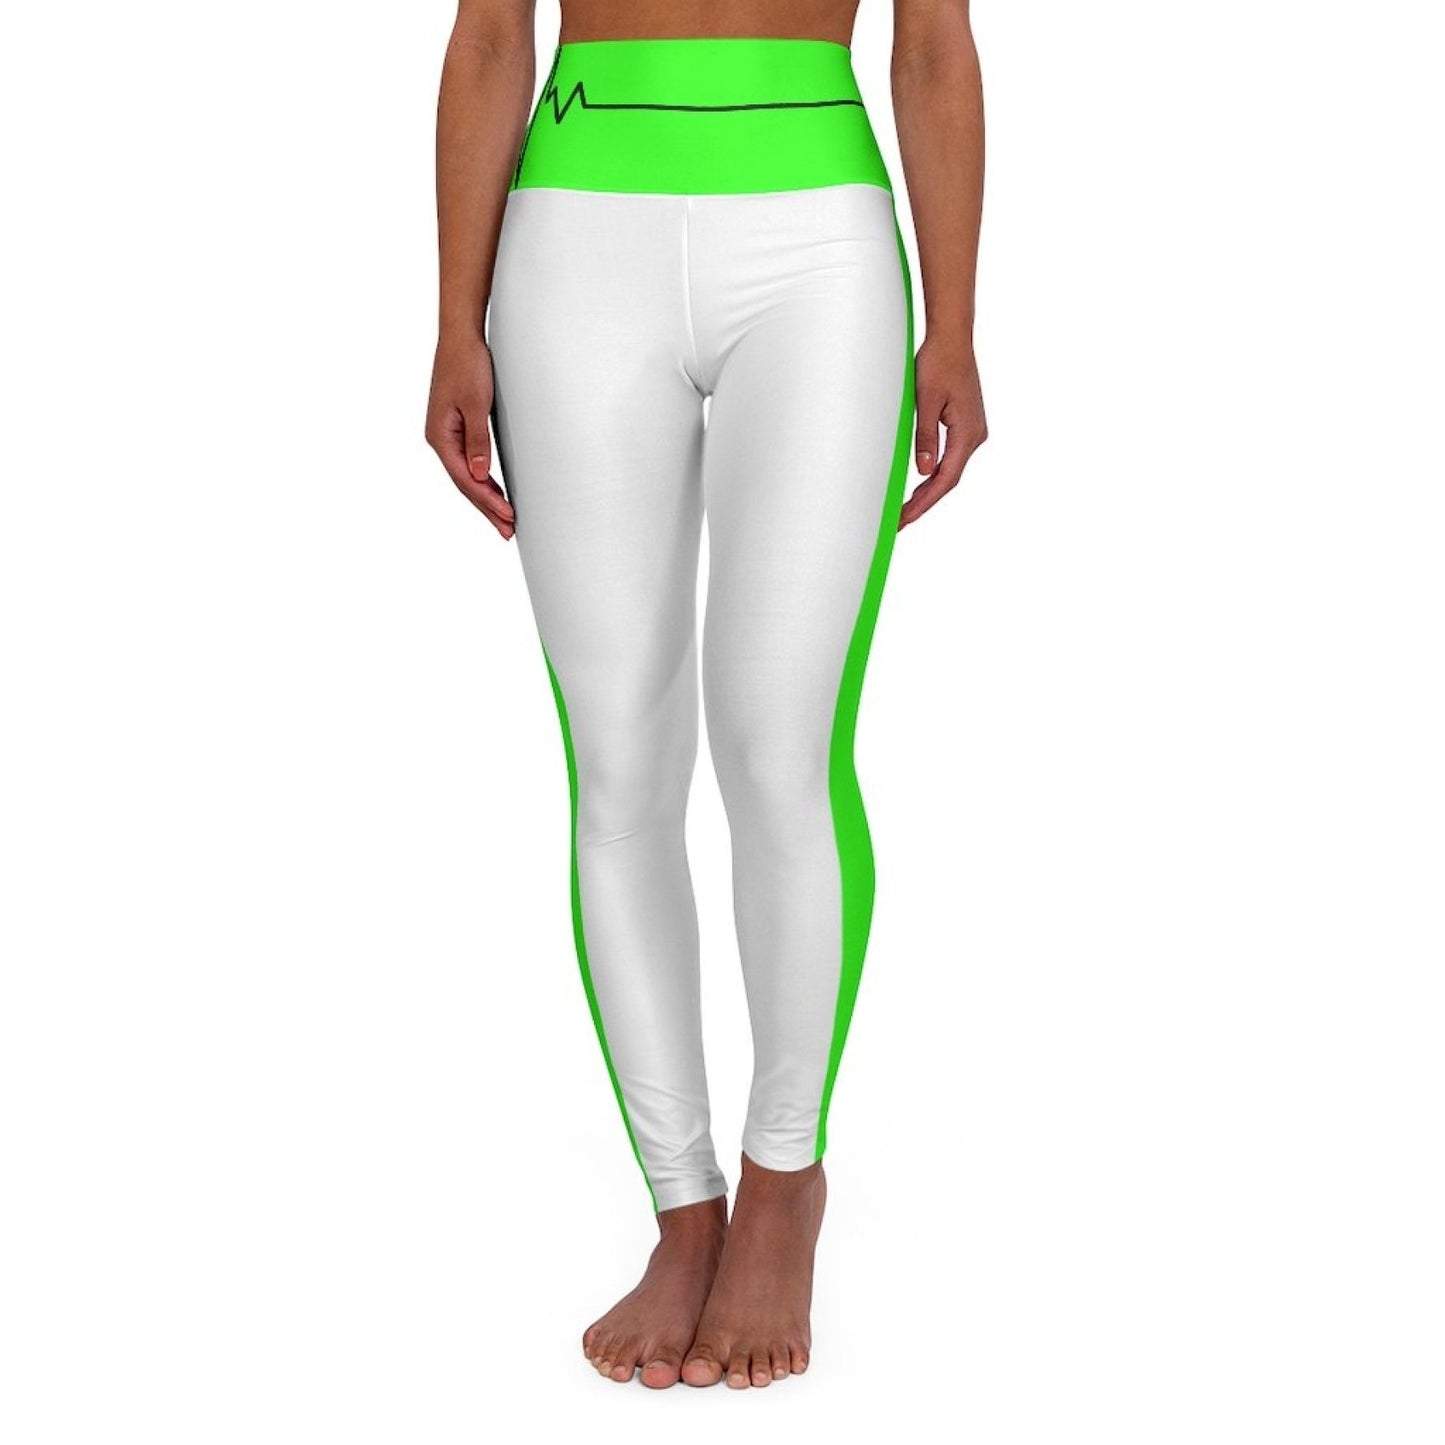 High Waisted Yoga Leggings, White And Neon Green Black Bordered